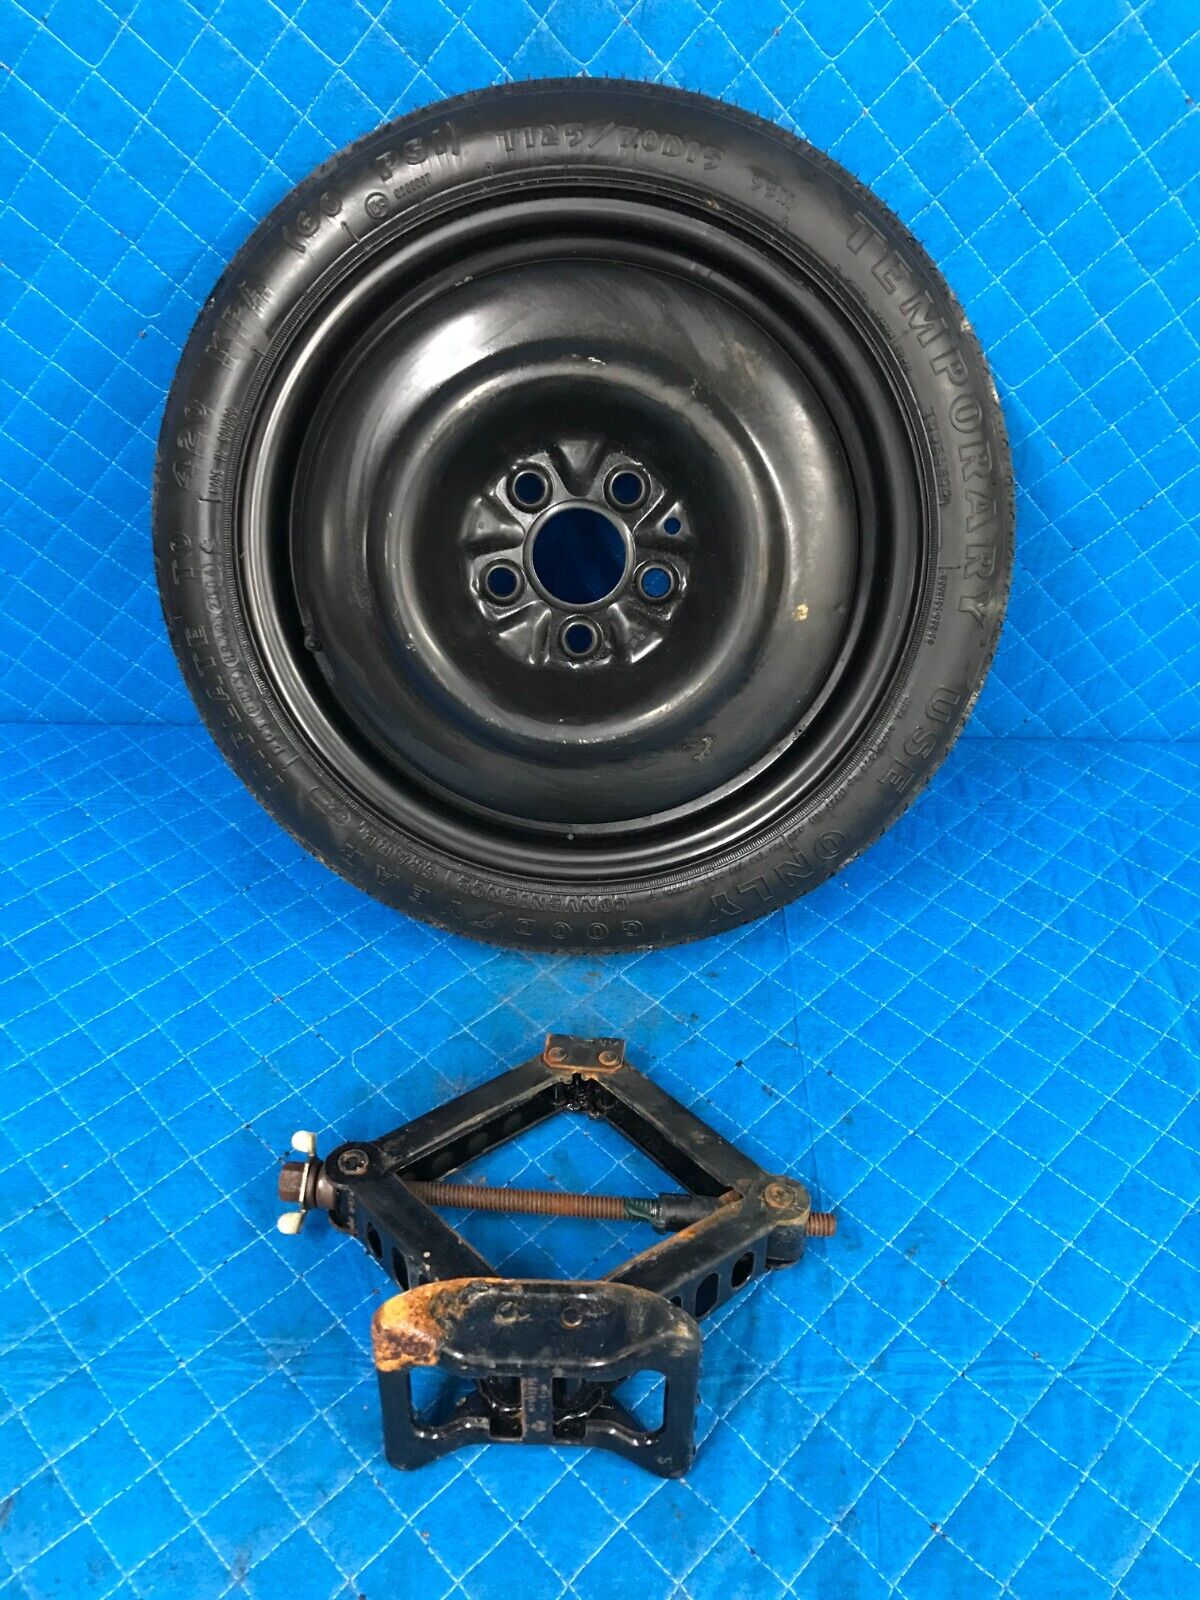 01-06 Chrysler Sebring Convertible Emergency Spare Tire T125/70D15 Goodyear Jack